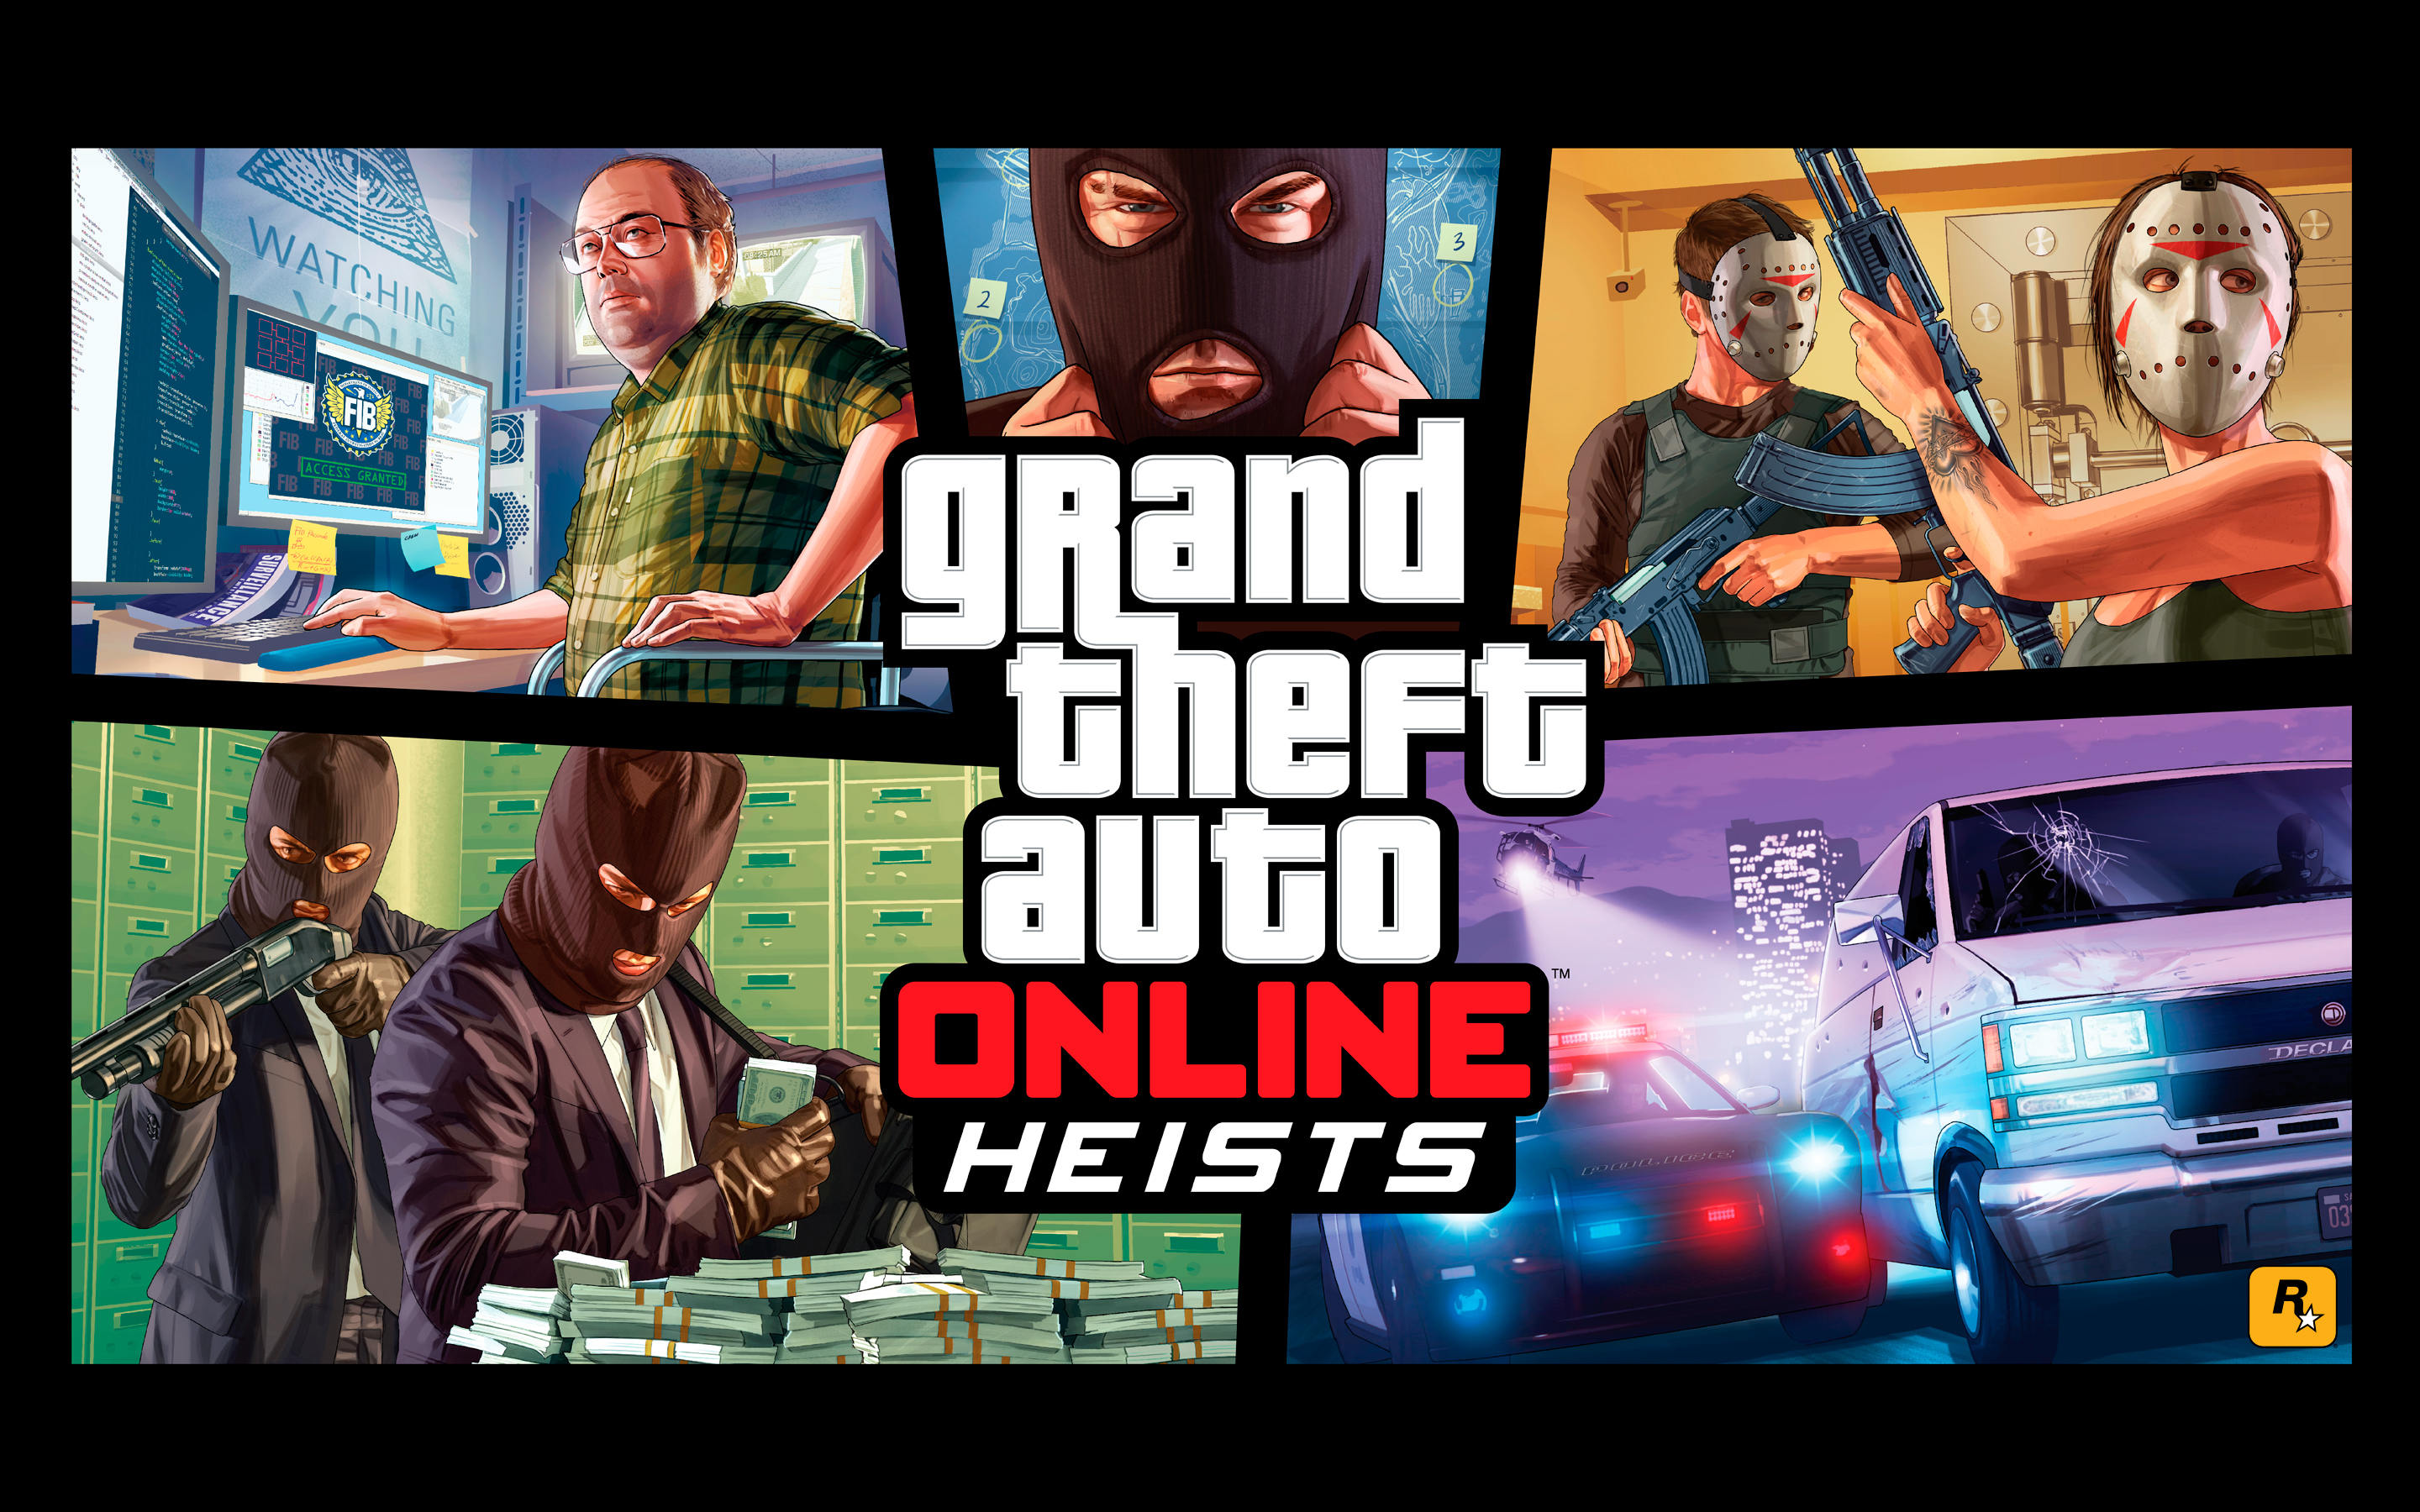 Grand Theft Auto V Full HD Fond d'écran and Arrière-Plan | 2880x1800 | ID:615337